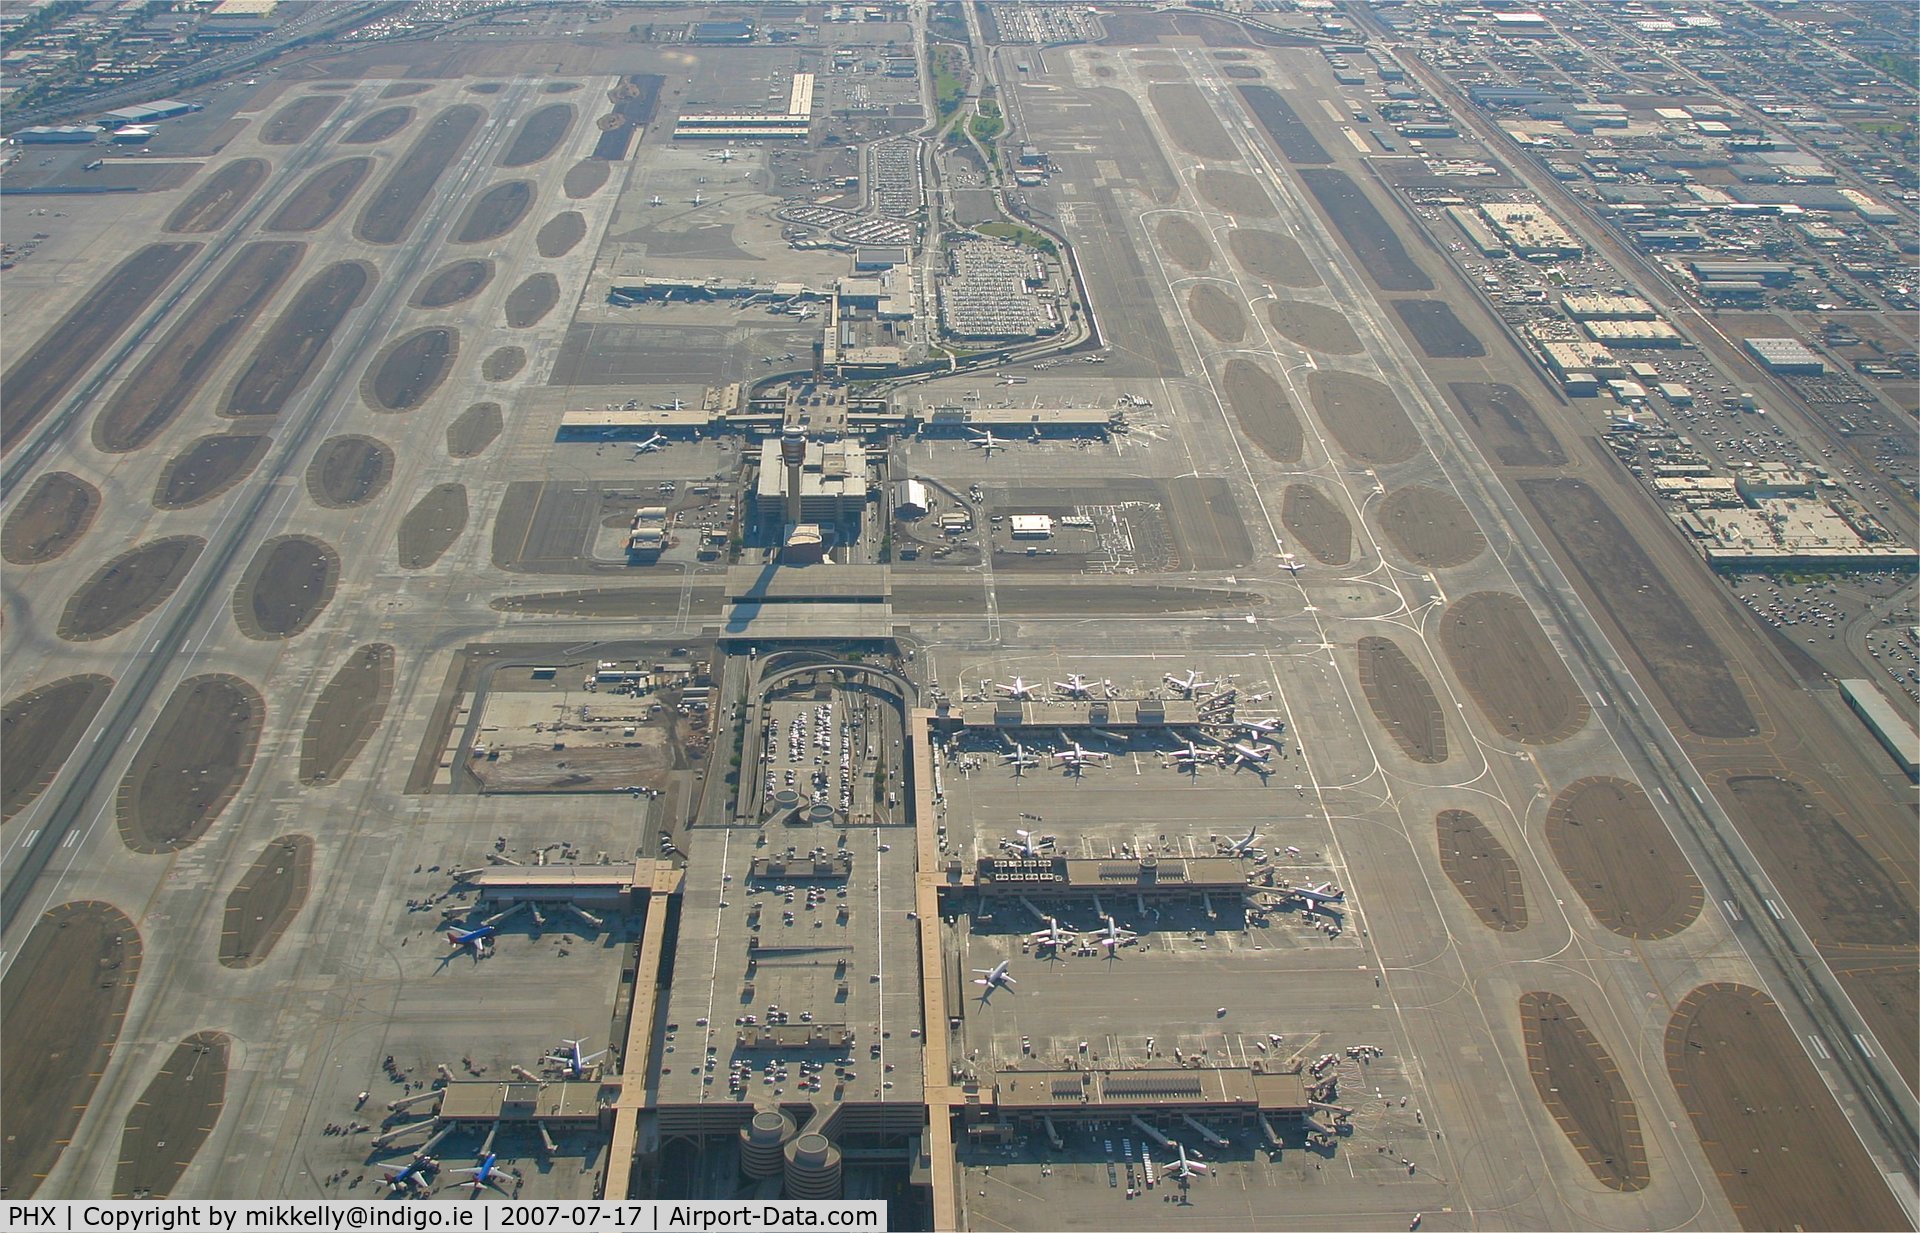 Phoenix Sky Harbor International Airport (PHX) - A view of Phoenix Sky Harbour looking towards the West